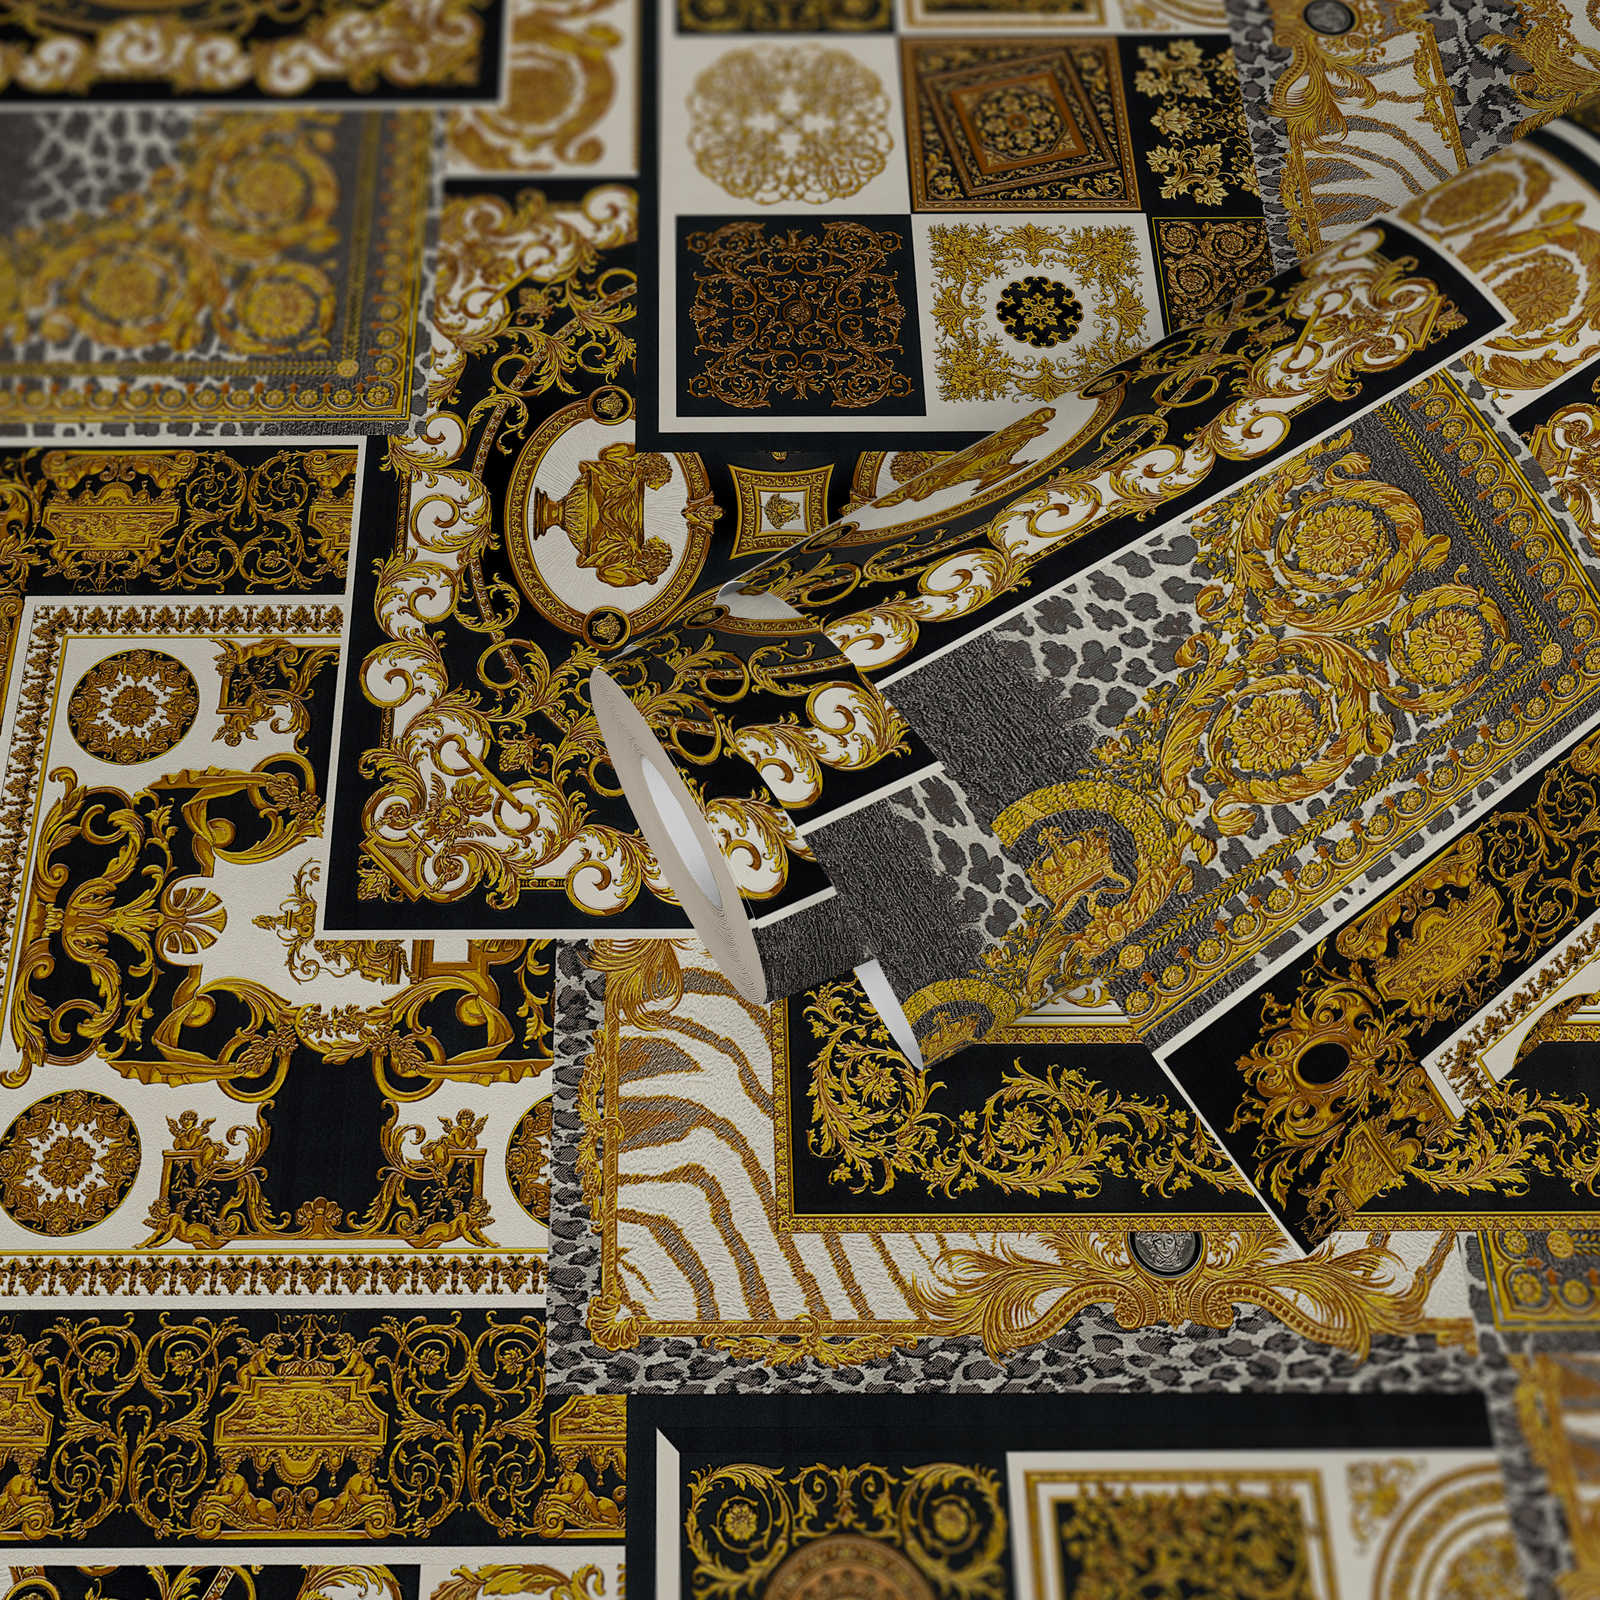             VERSACE Home Tapete Barock-Details & Animal Print – Gold, Silber, Schwarz
        